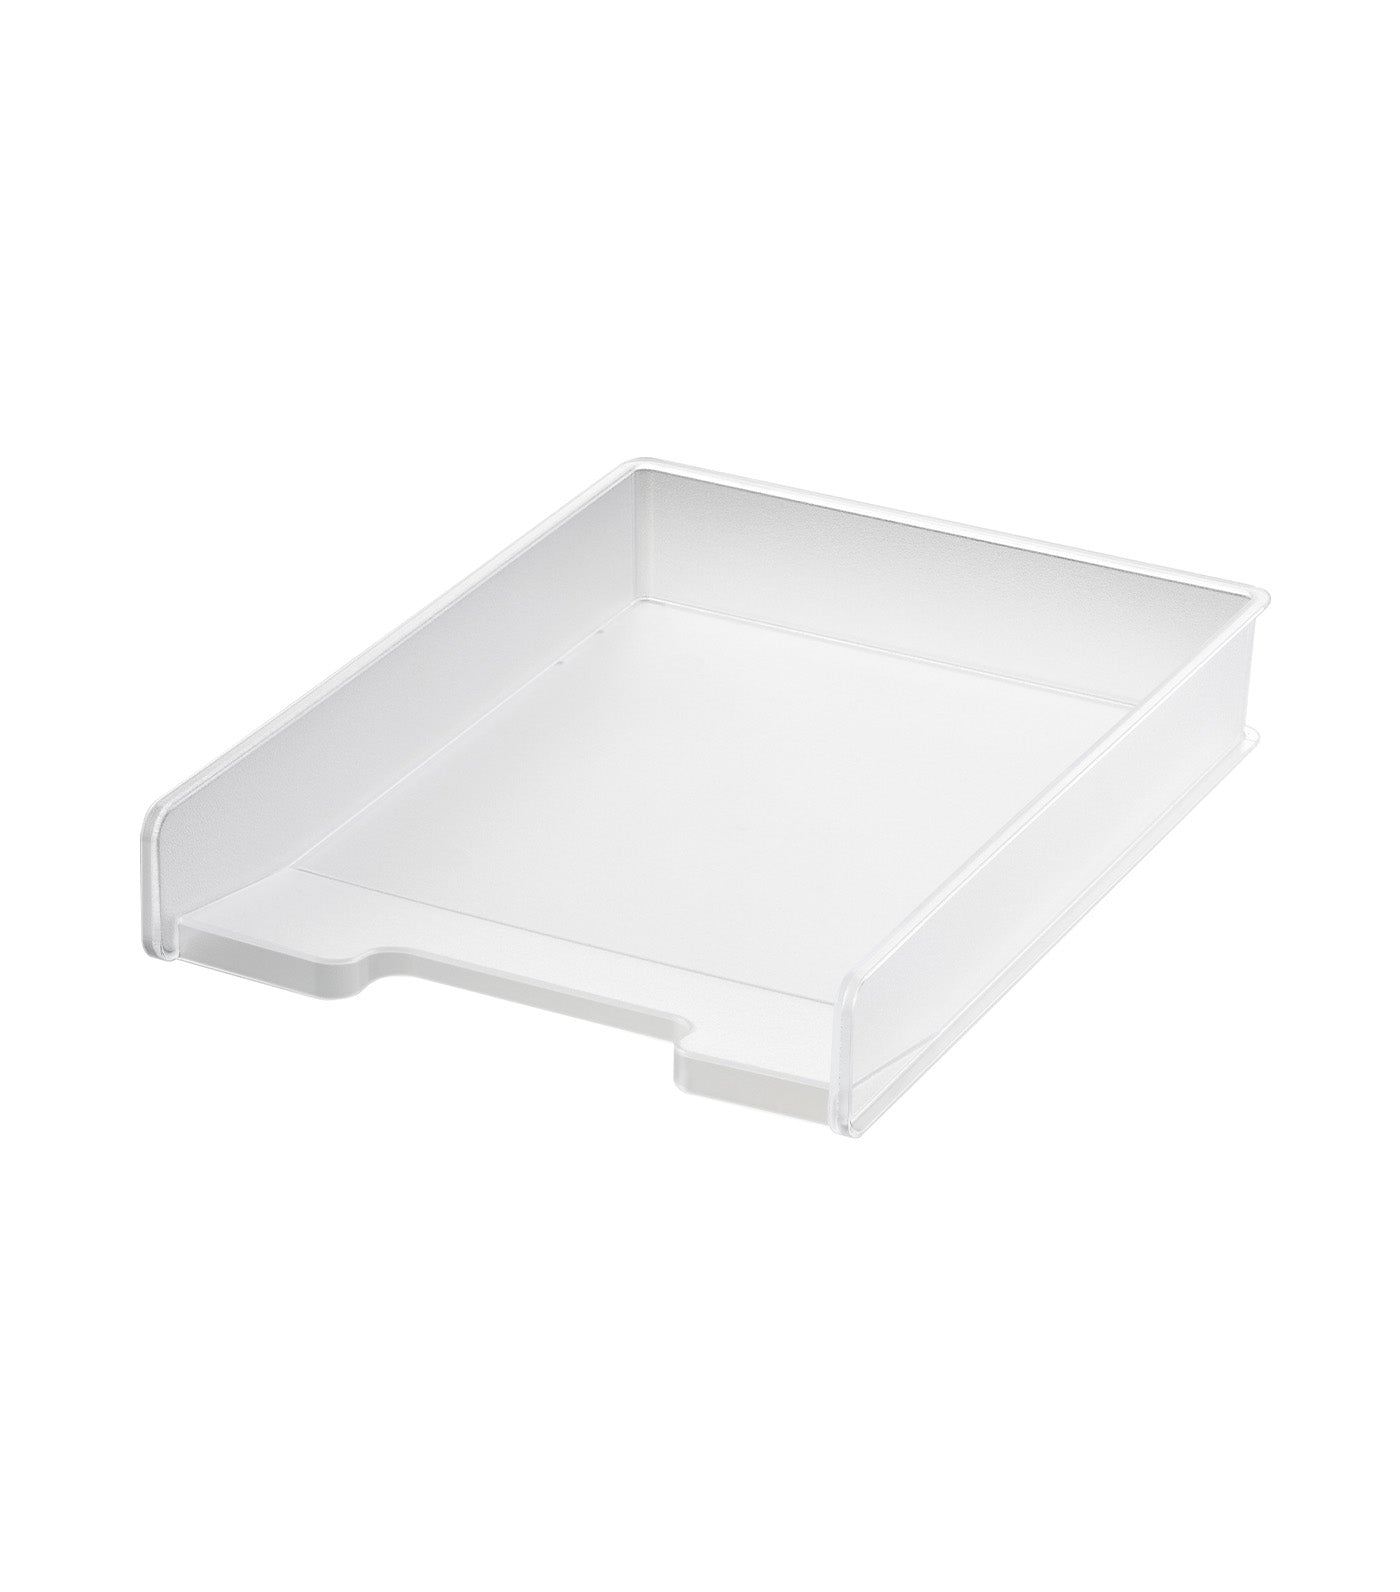 MakeRoom Soffice Desk Tray - Clear